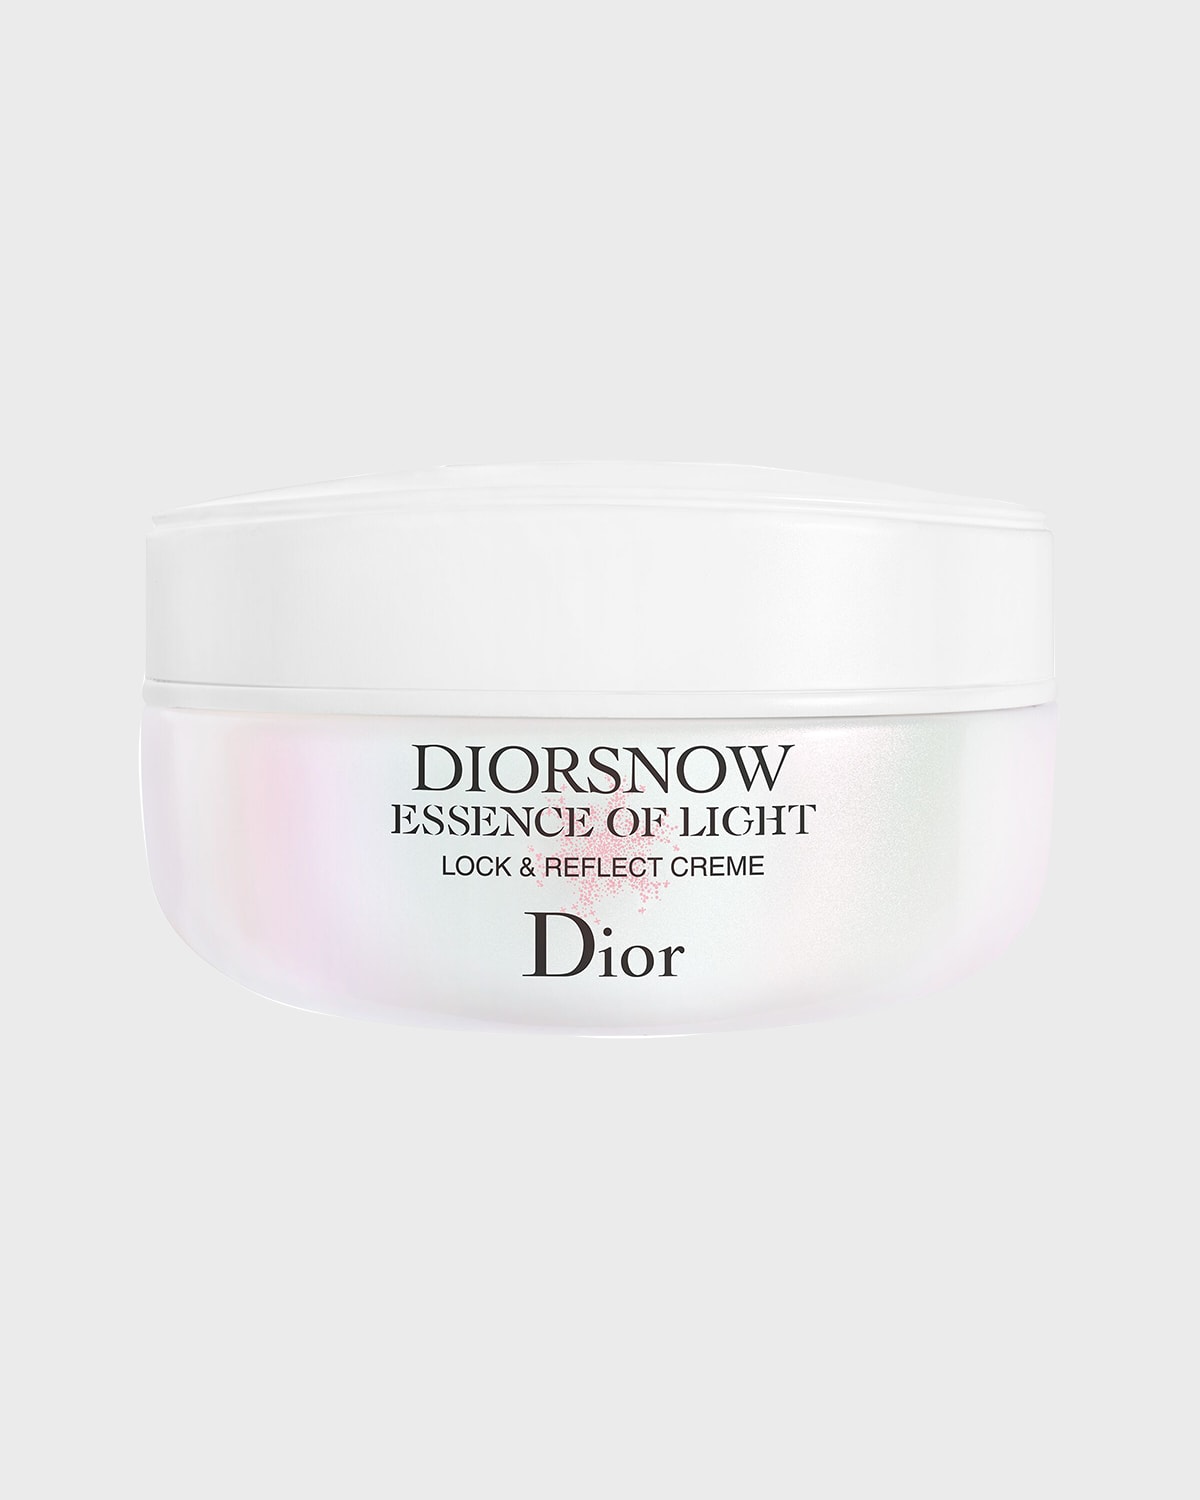 Diorsnow Essence of Light Lock & Reflect Creme Face Moisturizer, 1.7 oz.